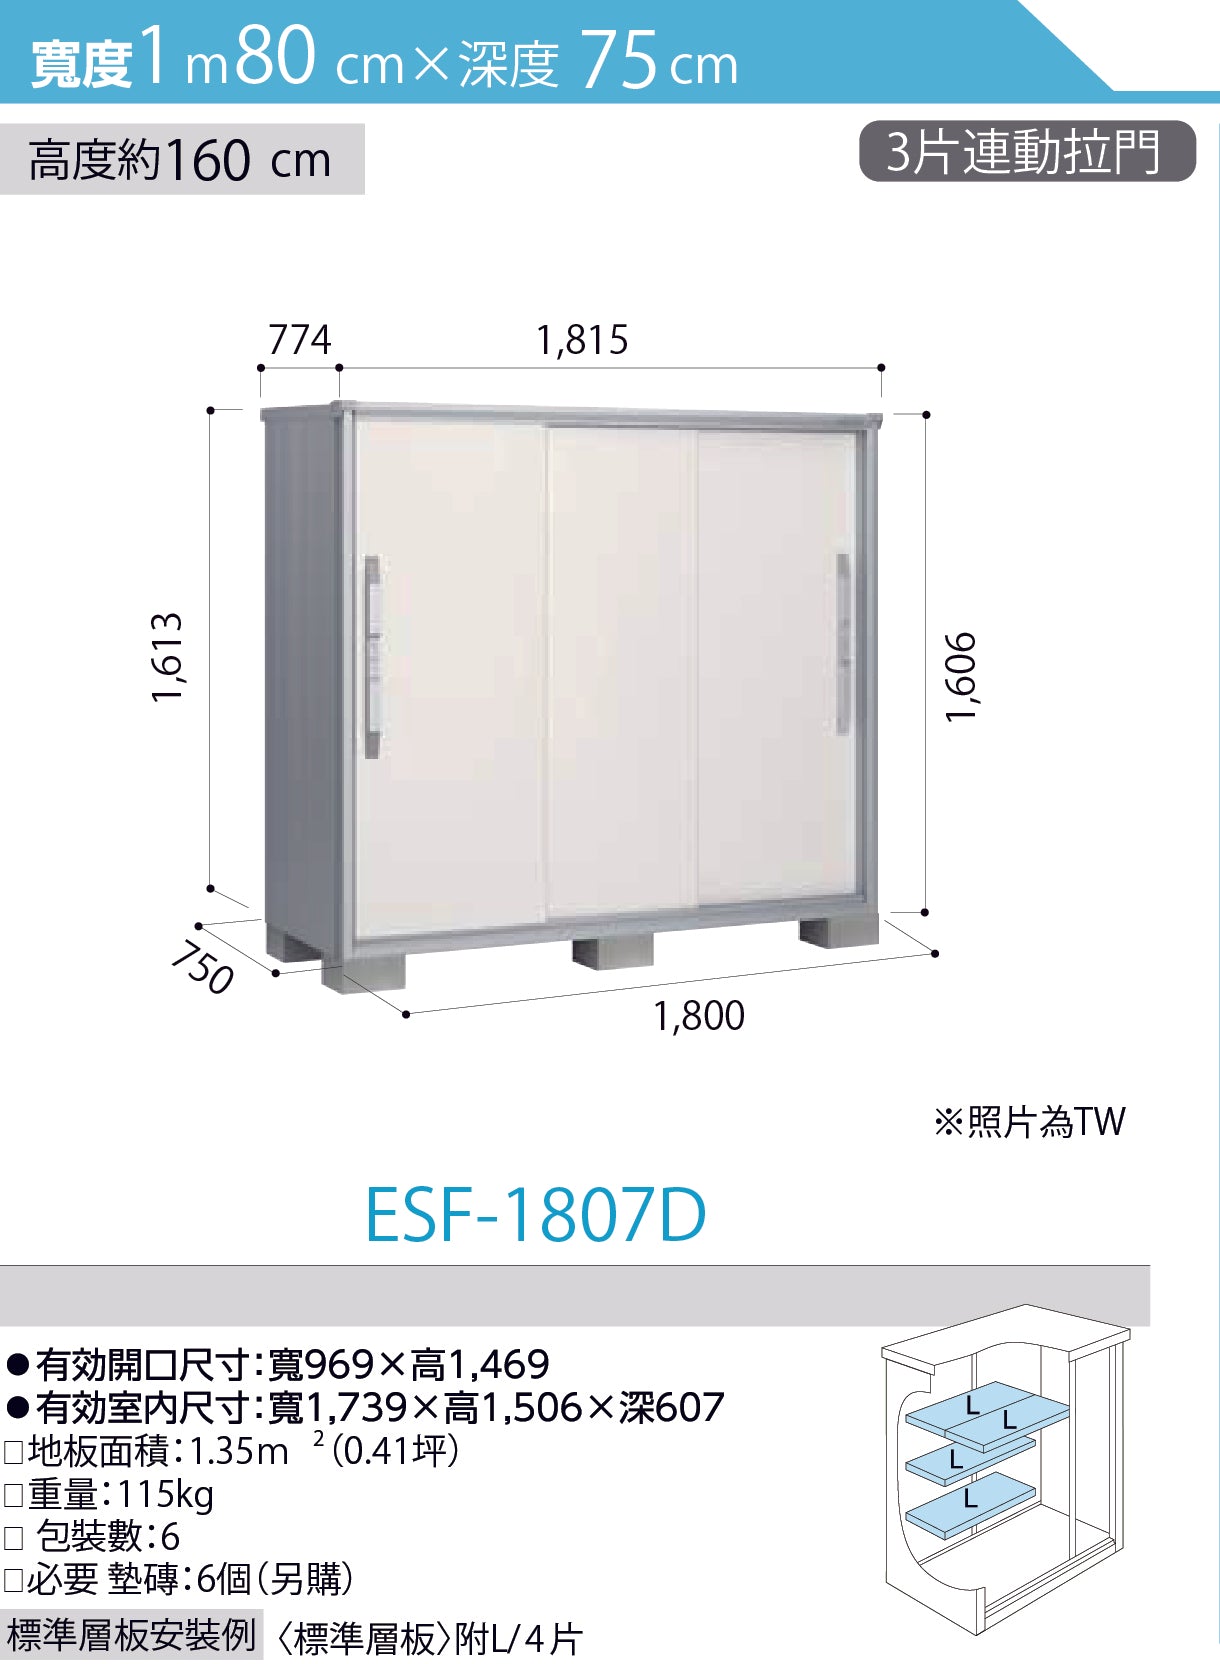 *Pre-order* YODOKO ESF-1807 (W180cmxD75cm) Height ( 110 / 130 / 160 / 190 cm )